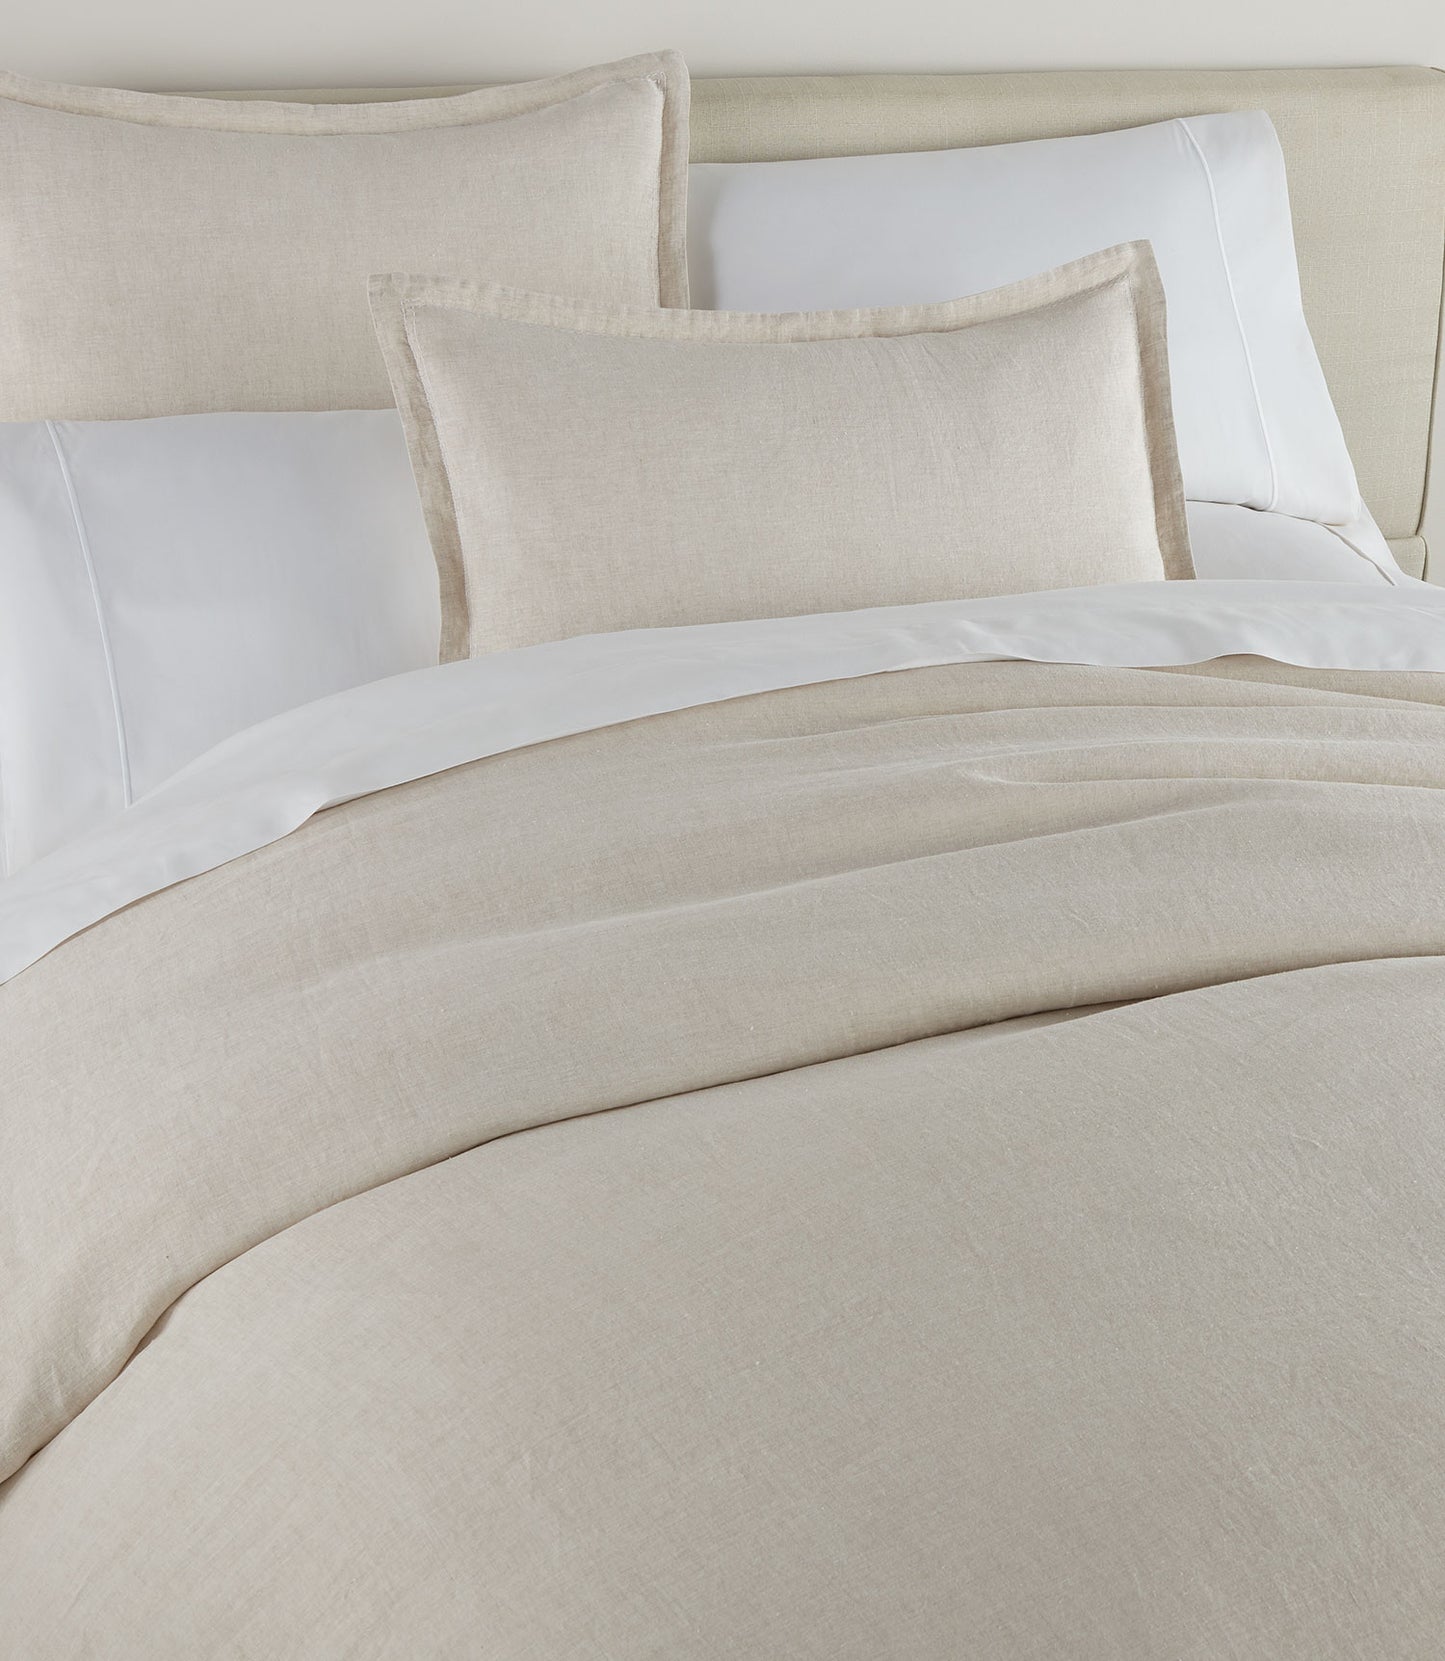 European Washed Linen Duvet Cover on bed, Natural